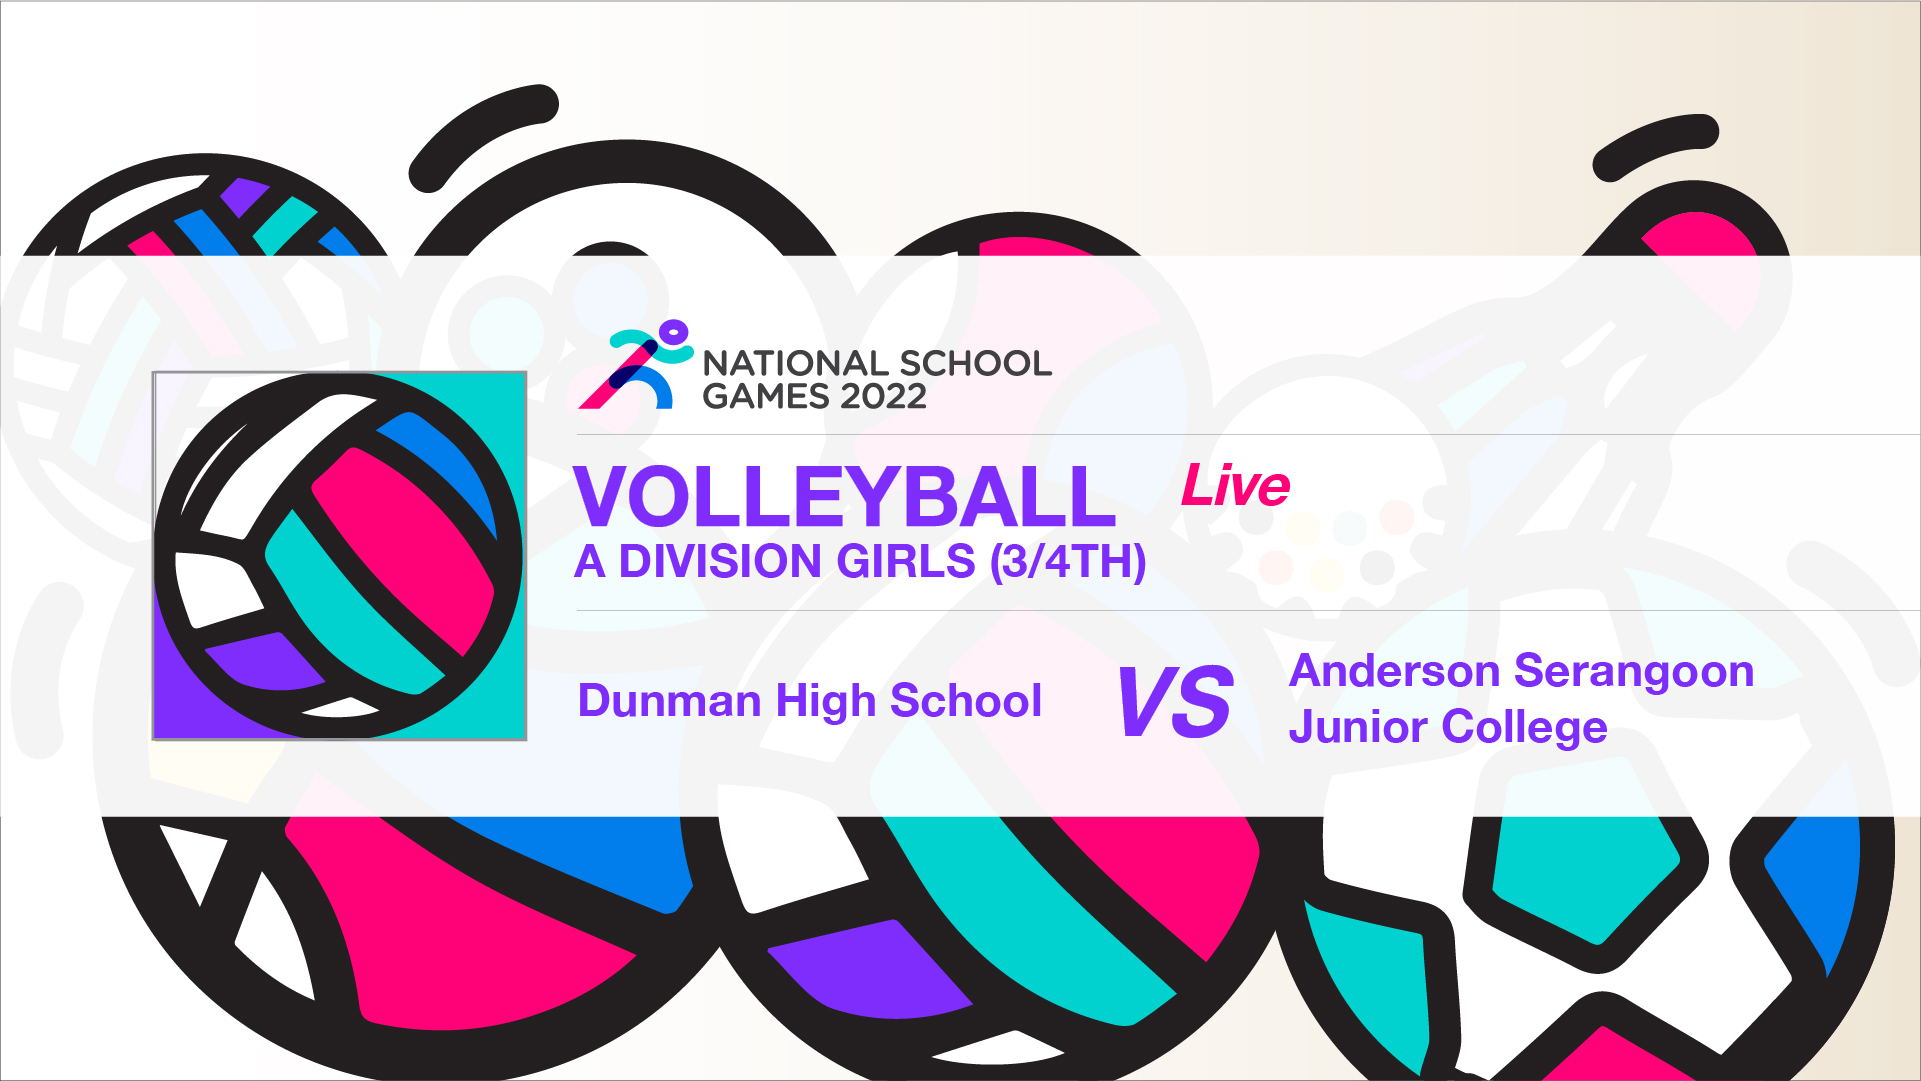 SSSC Volleyball A Division Girls 3rd/4th | Dunman High School vs Anderson Serangoon Junior College